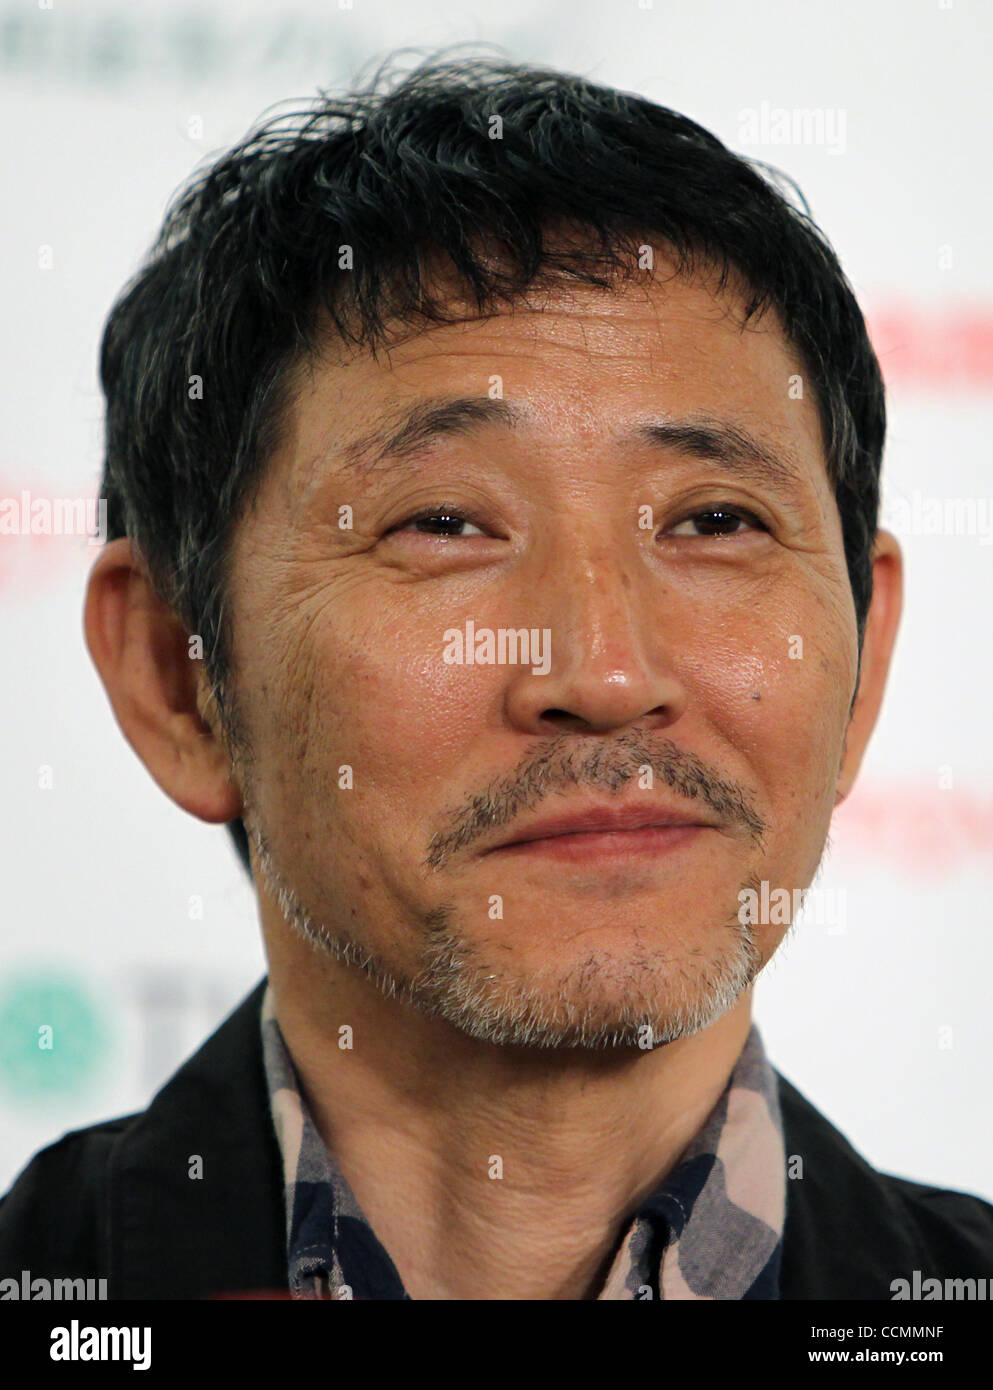 oct 28 2010 tokyo japan actor kaoru kobayashi attends a press conference CCMMNF